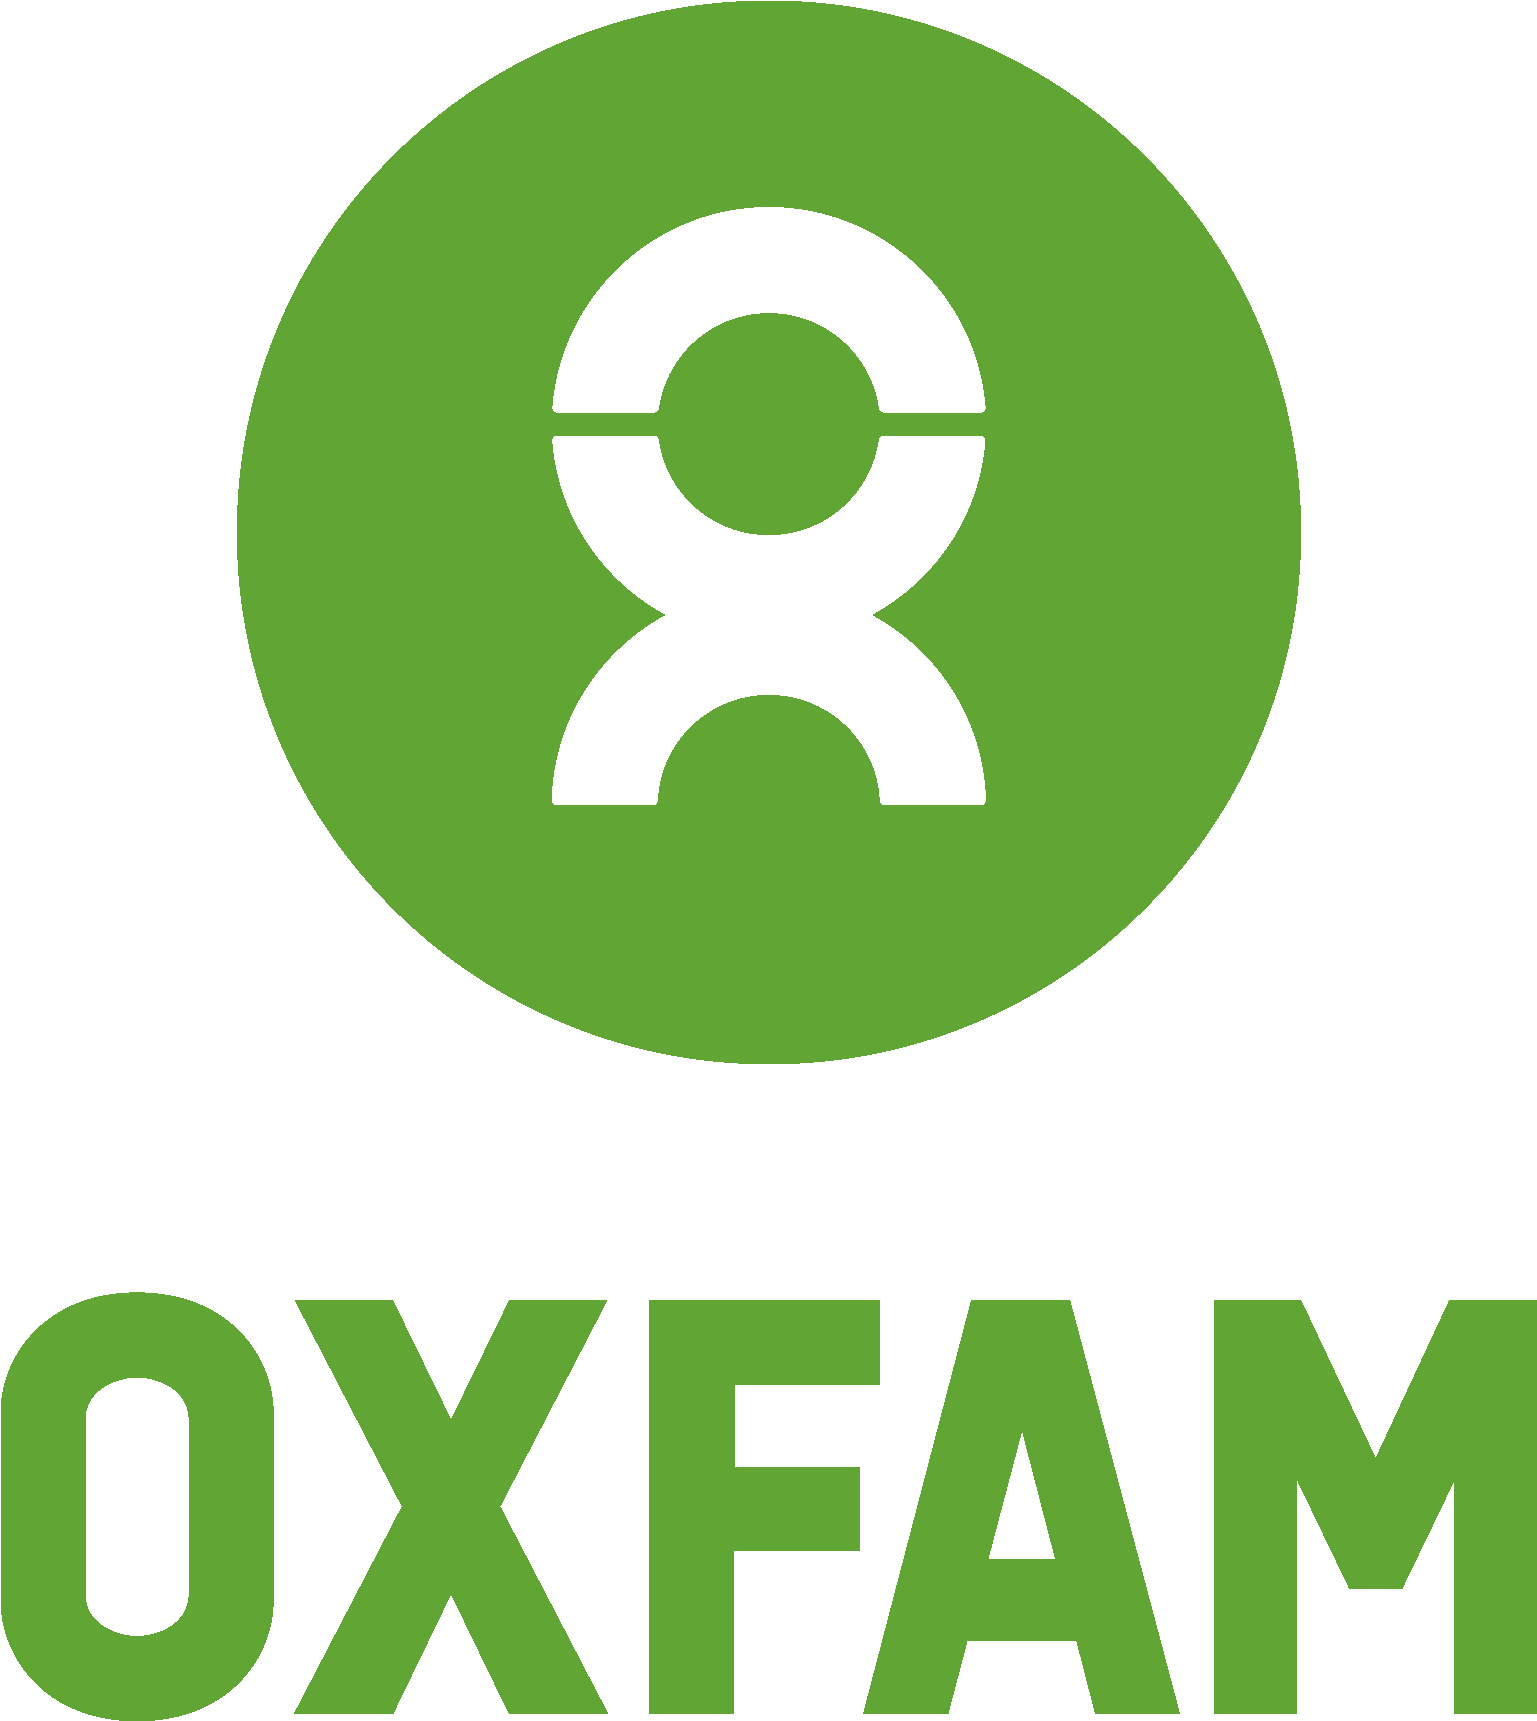 Vertical, Green - Oxfam Logo .png (1654x1831)